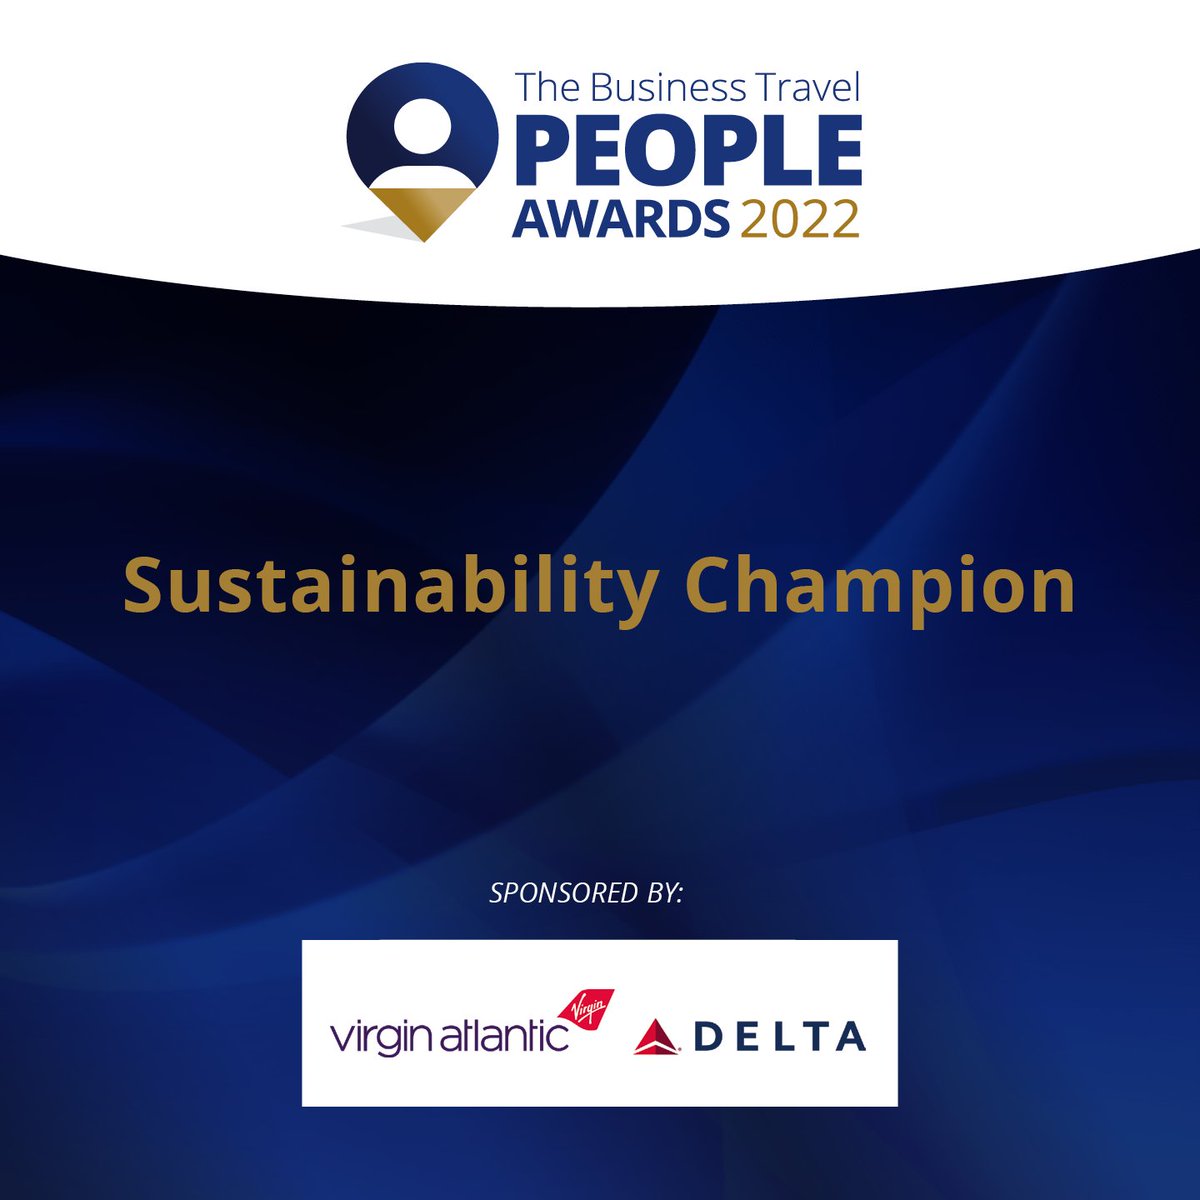 Our Sustainability Champion award has kindly sponsored by Virgin Atlantic and Delta #TBTPA2022 @VirginAtlantic @Delta